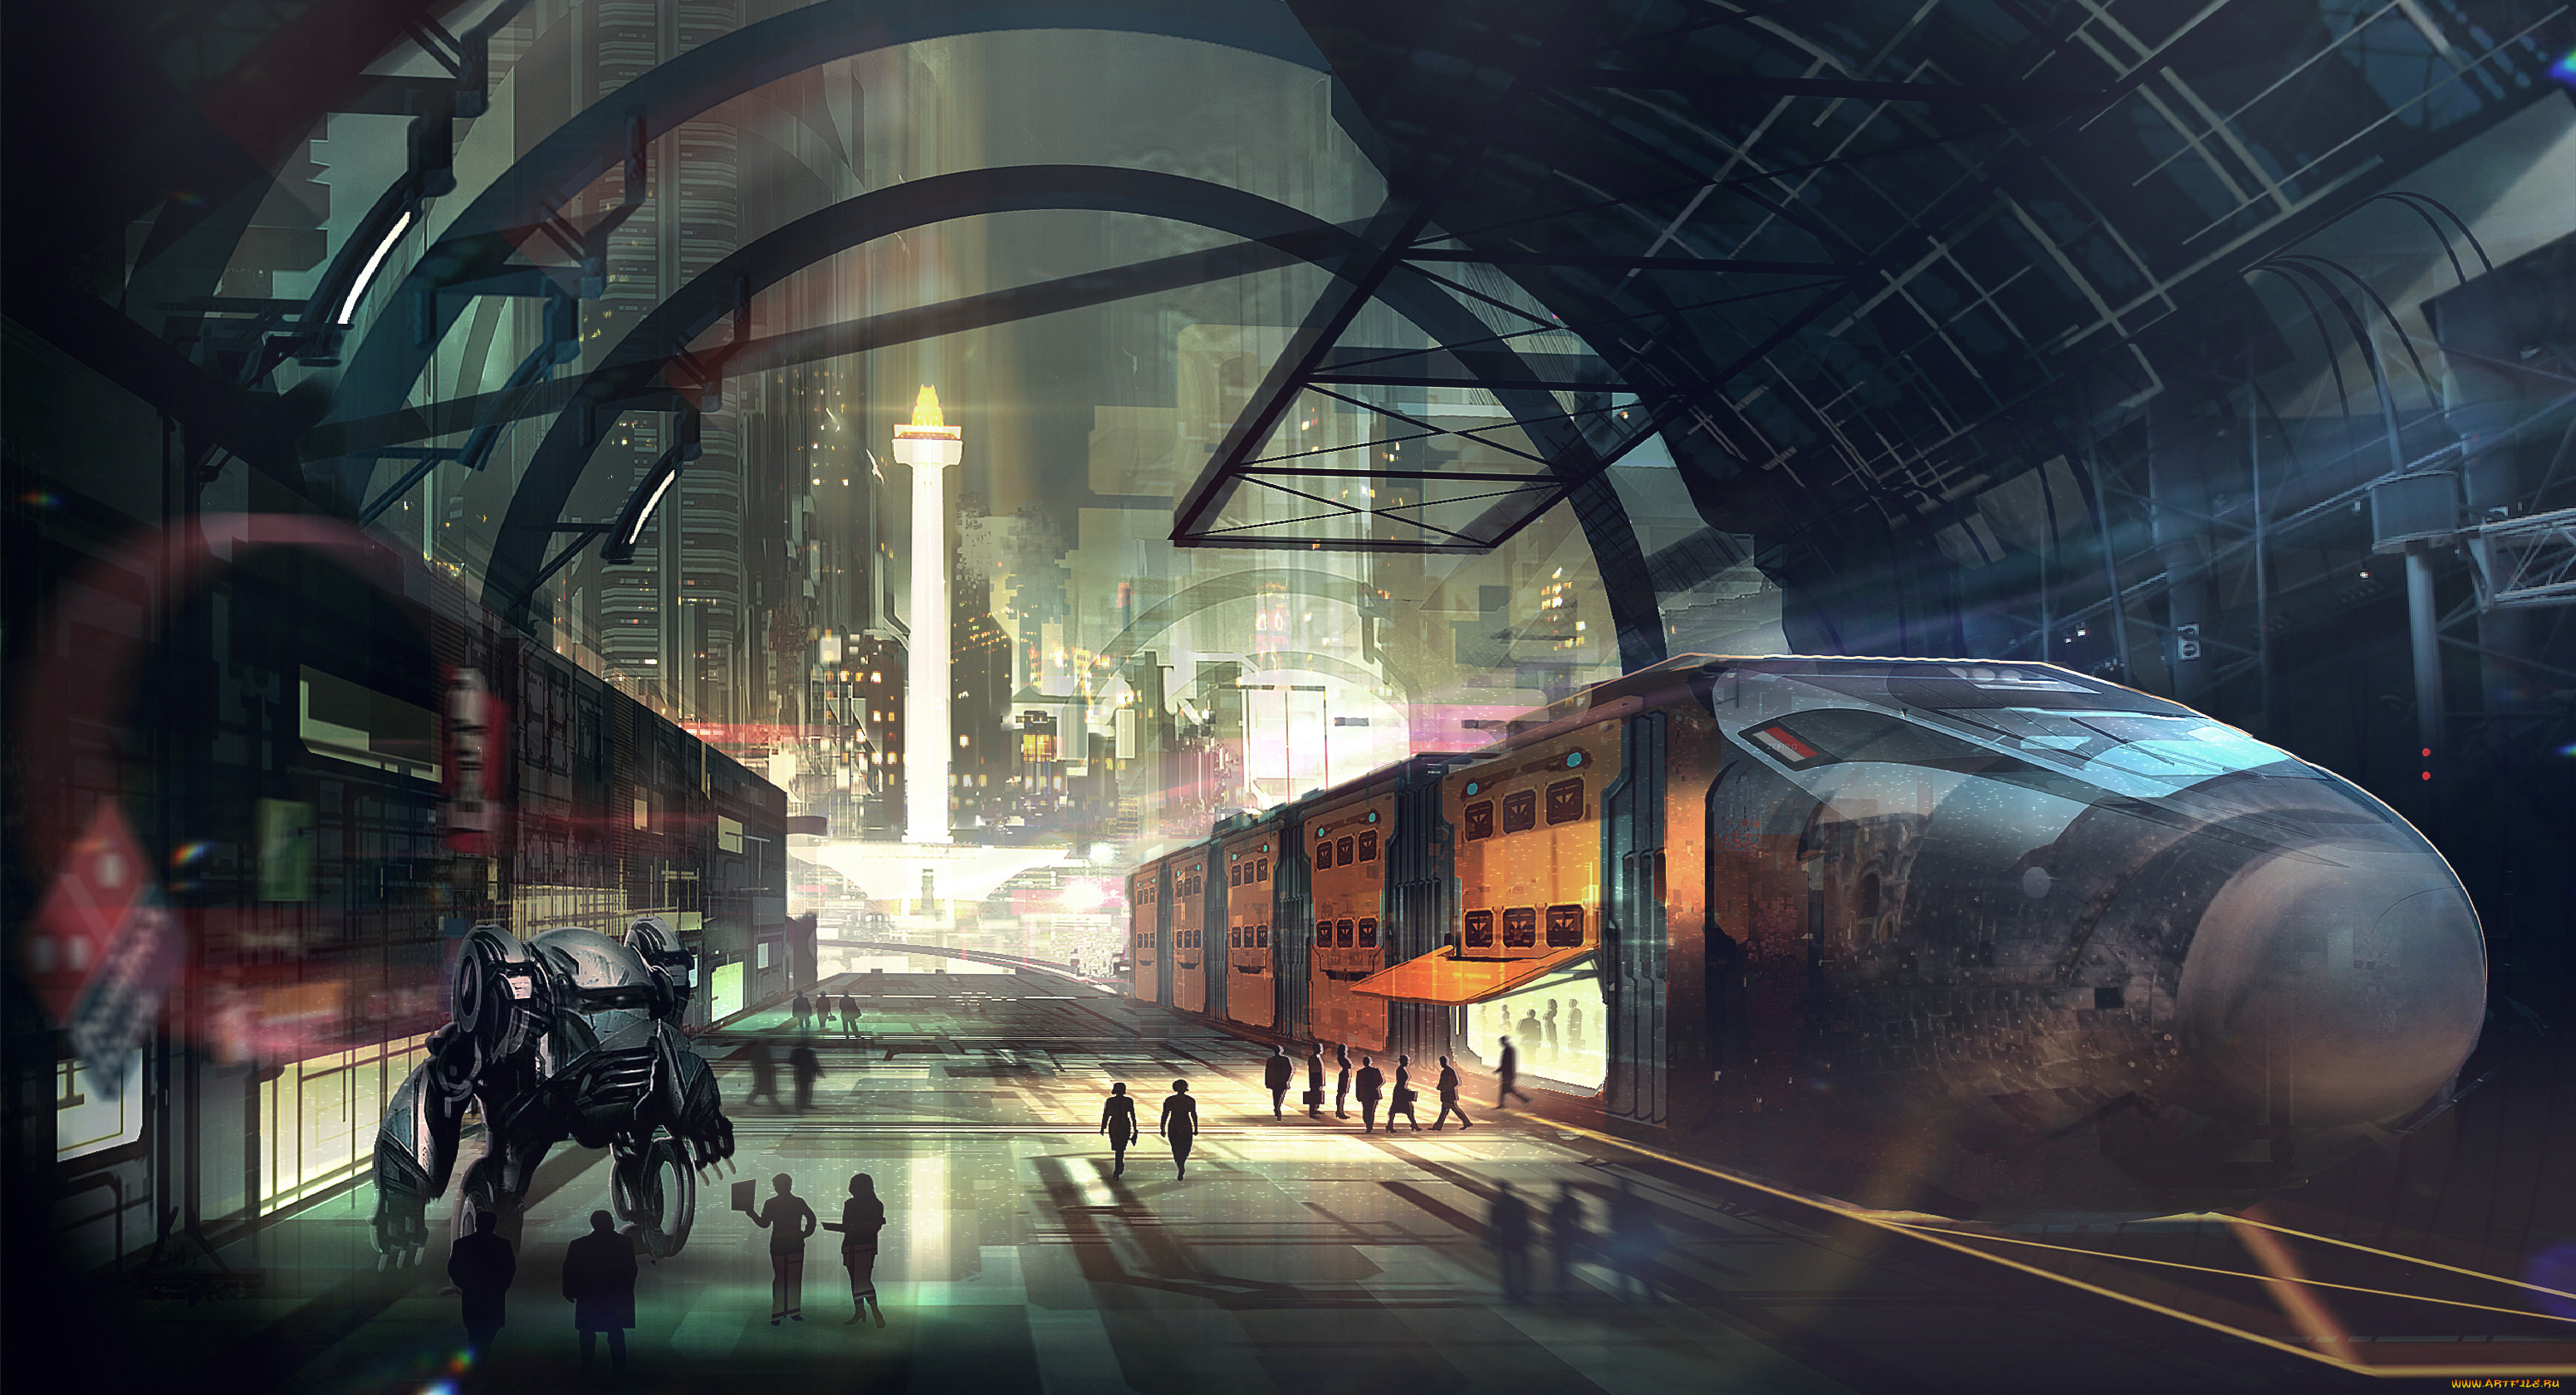 Cyberpunk scene. Вокзал будущего концепт арт Sci Fi. Арт вокзал сайберпанк. Монорельс киберпанк. Sci Fi город футуризм.